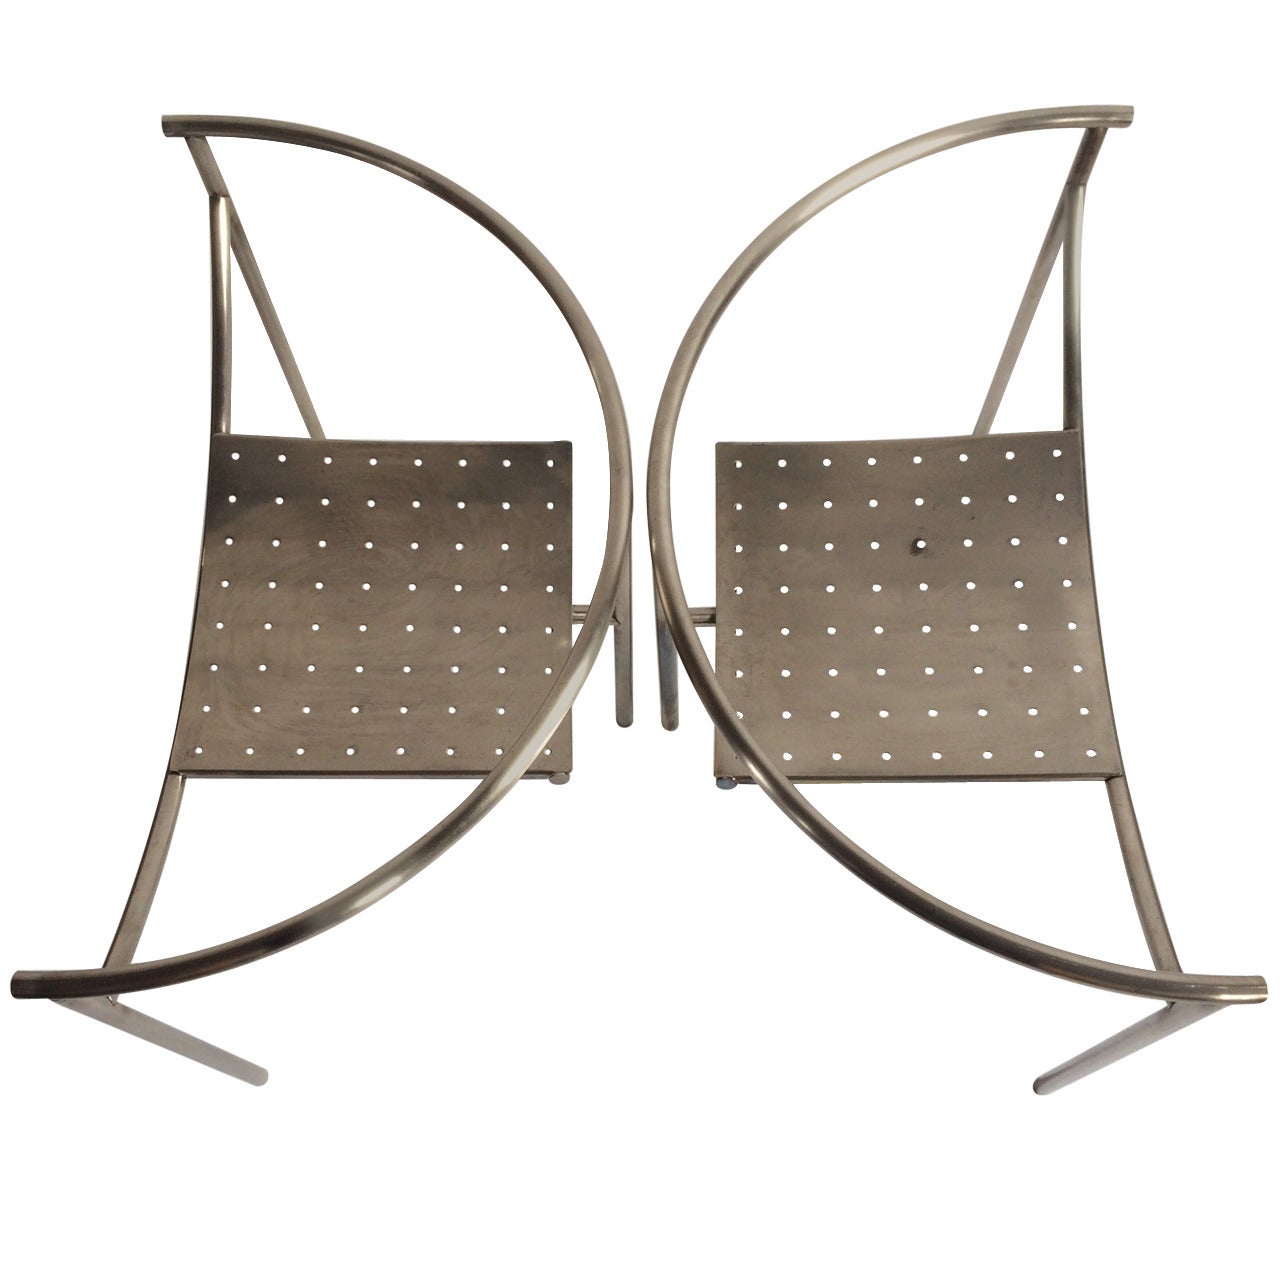 "Dr. Sonderbar" Chairs, Philippe Starck